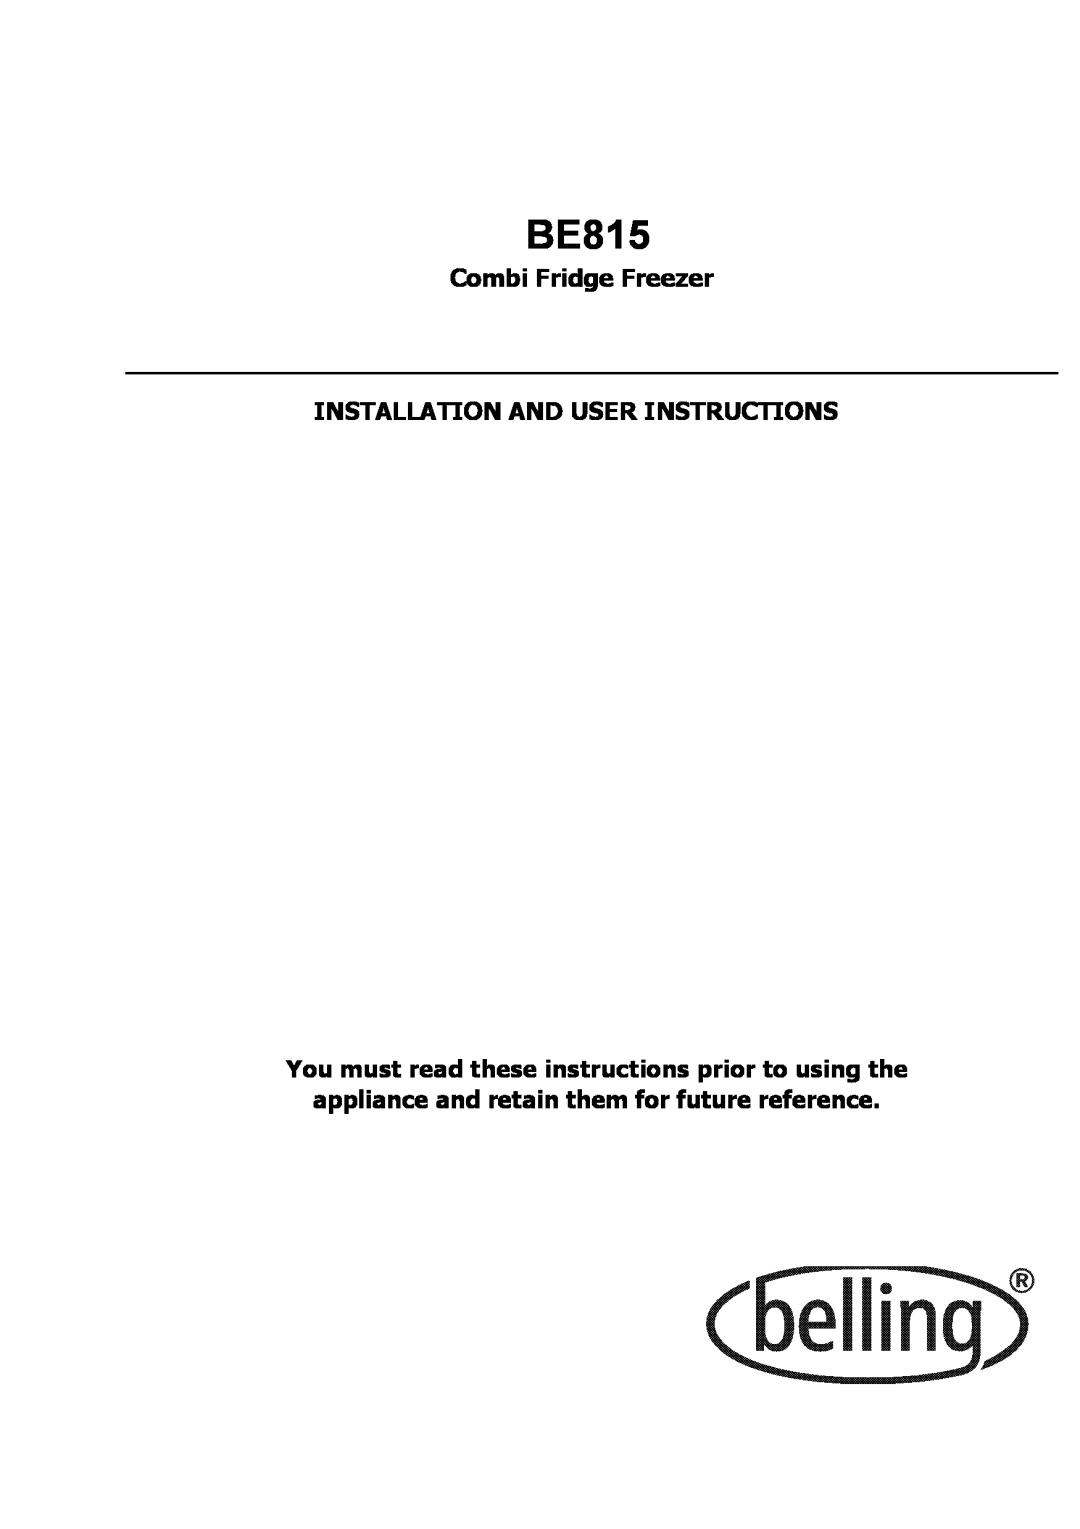 Glen Dimplex Home Appliances Ltd BE815 manual Combi Fridge Freezer, Installation And User Instructions 